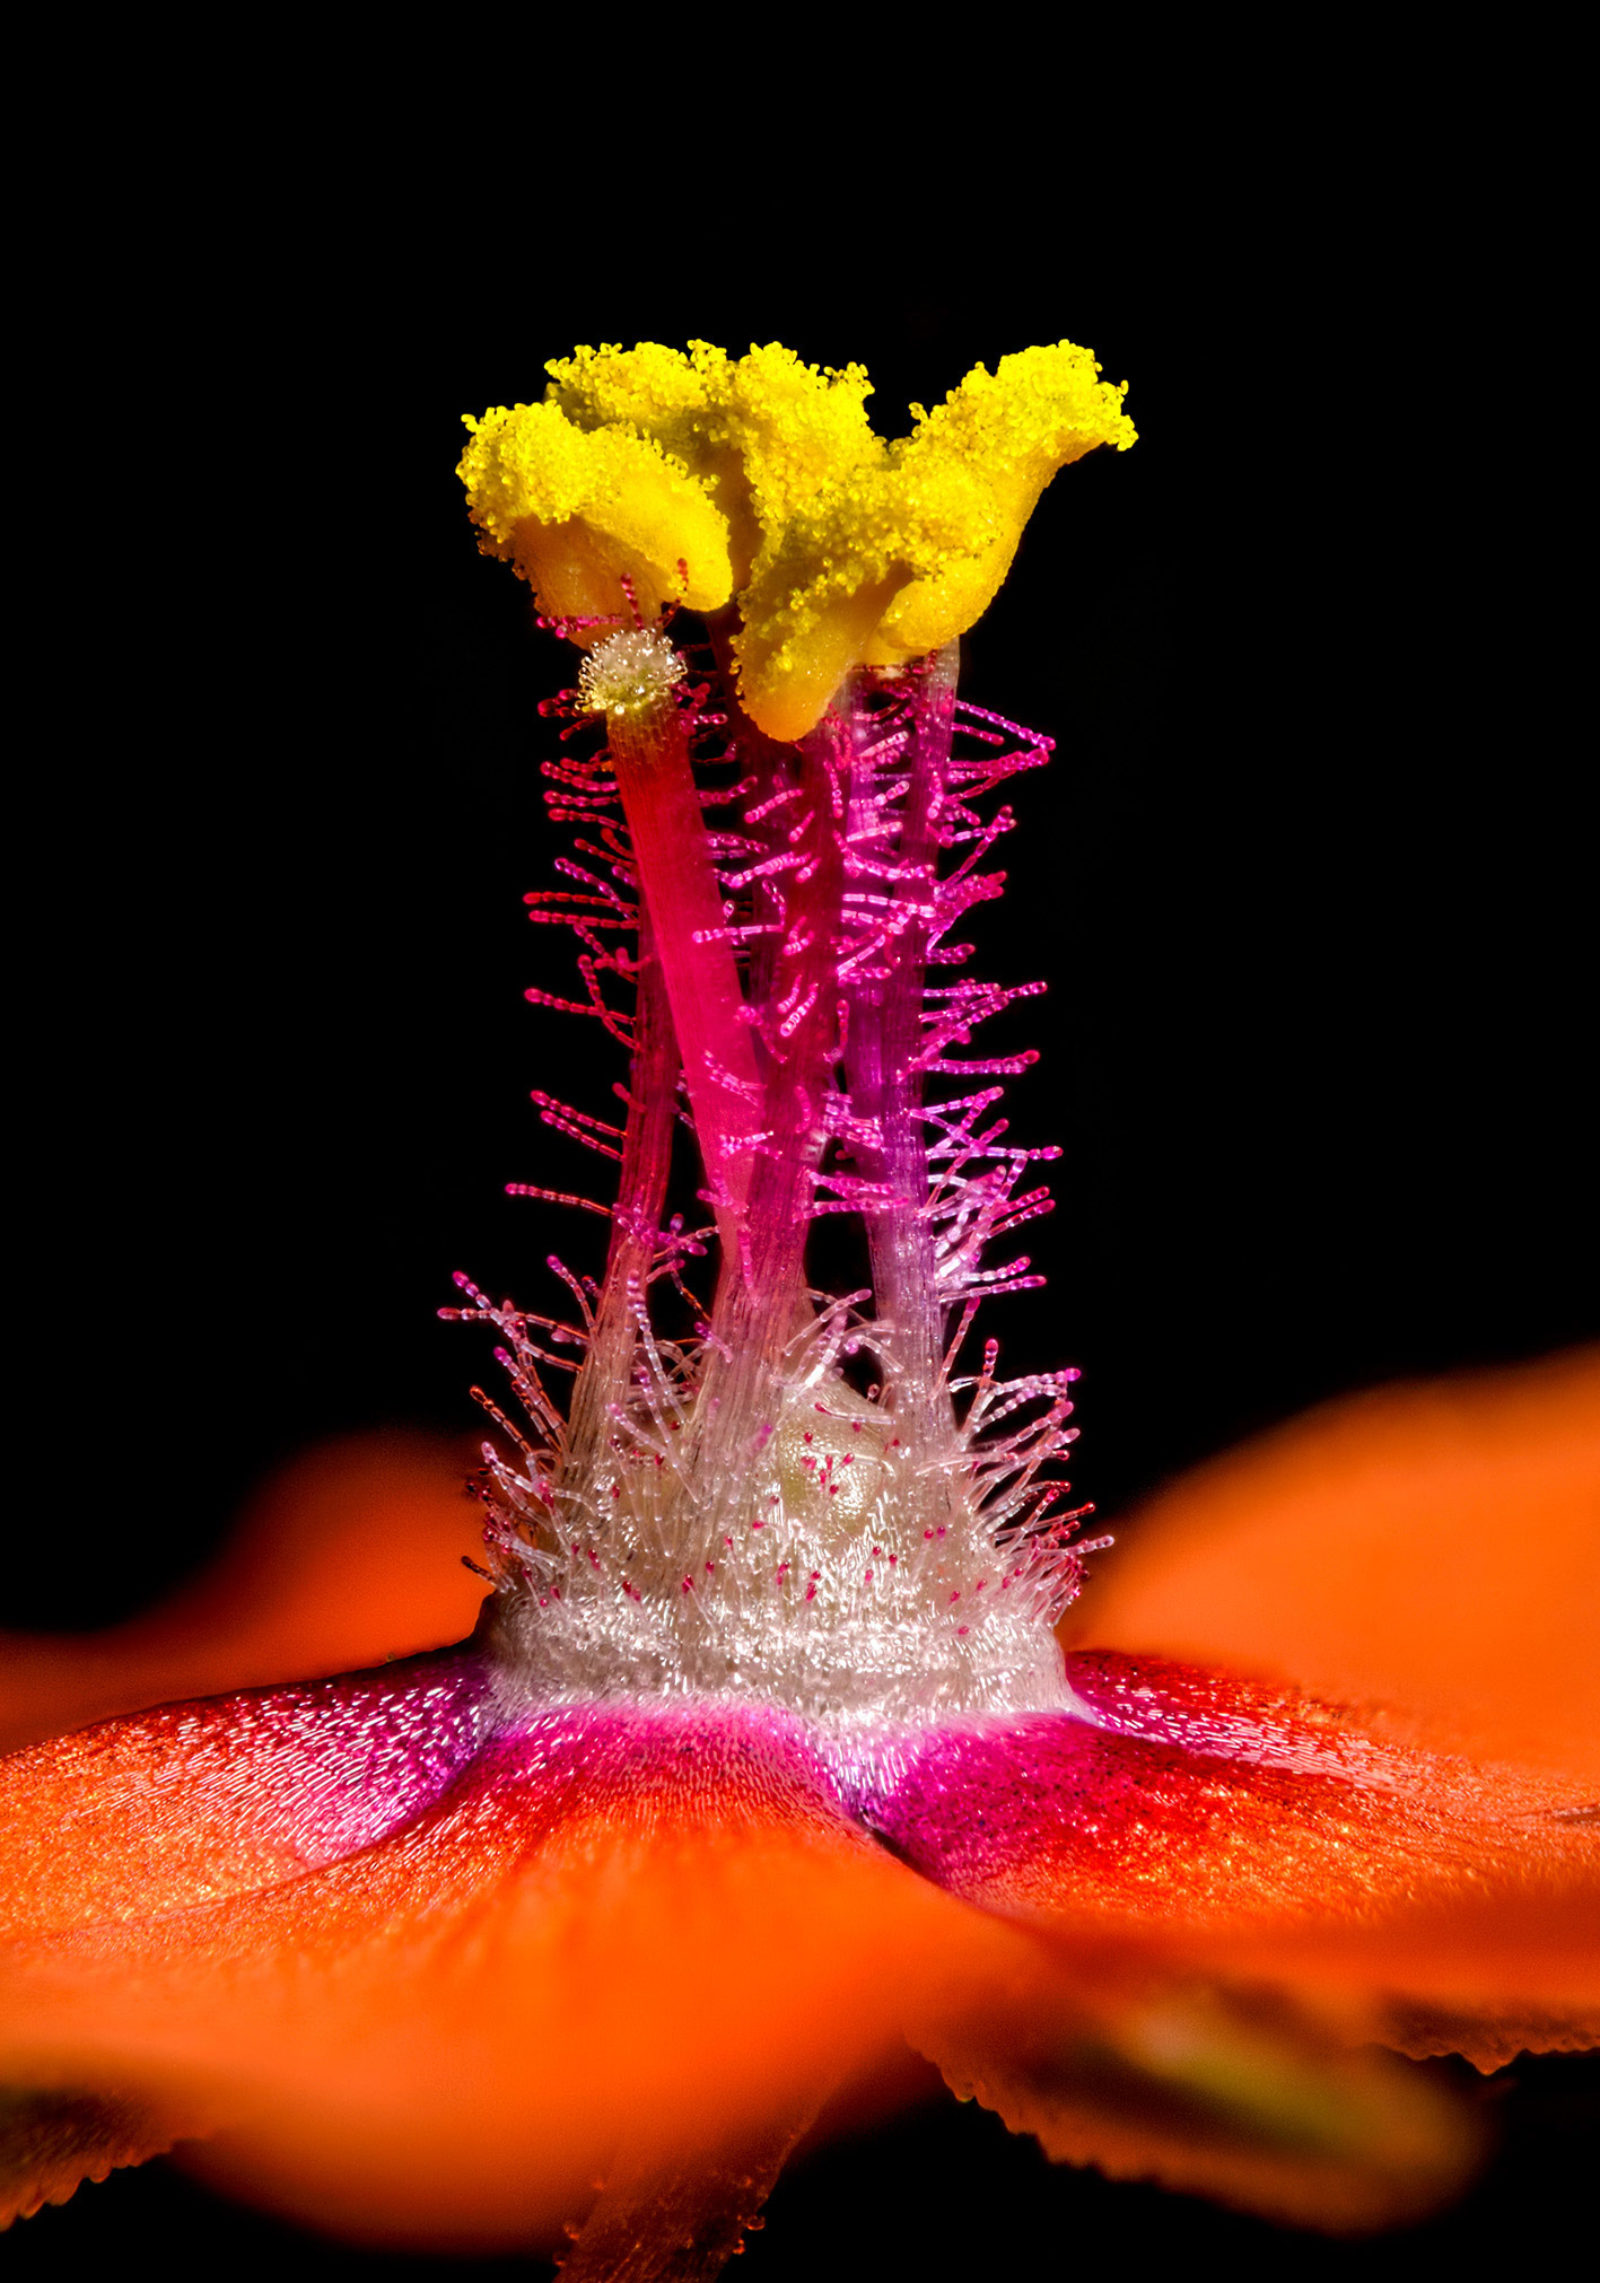 Фотография микро. Nikon small World Photomicrography. Цветы под микроскопом. Мир под микроскопом. Микрофотографии цветов.